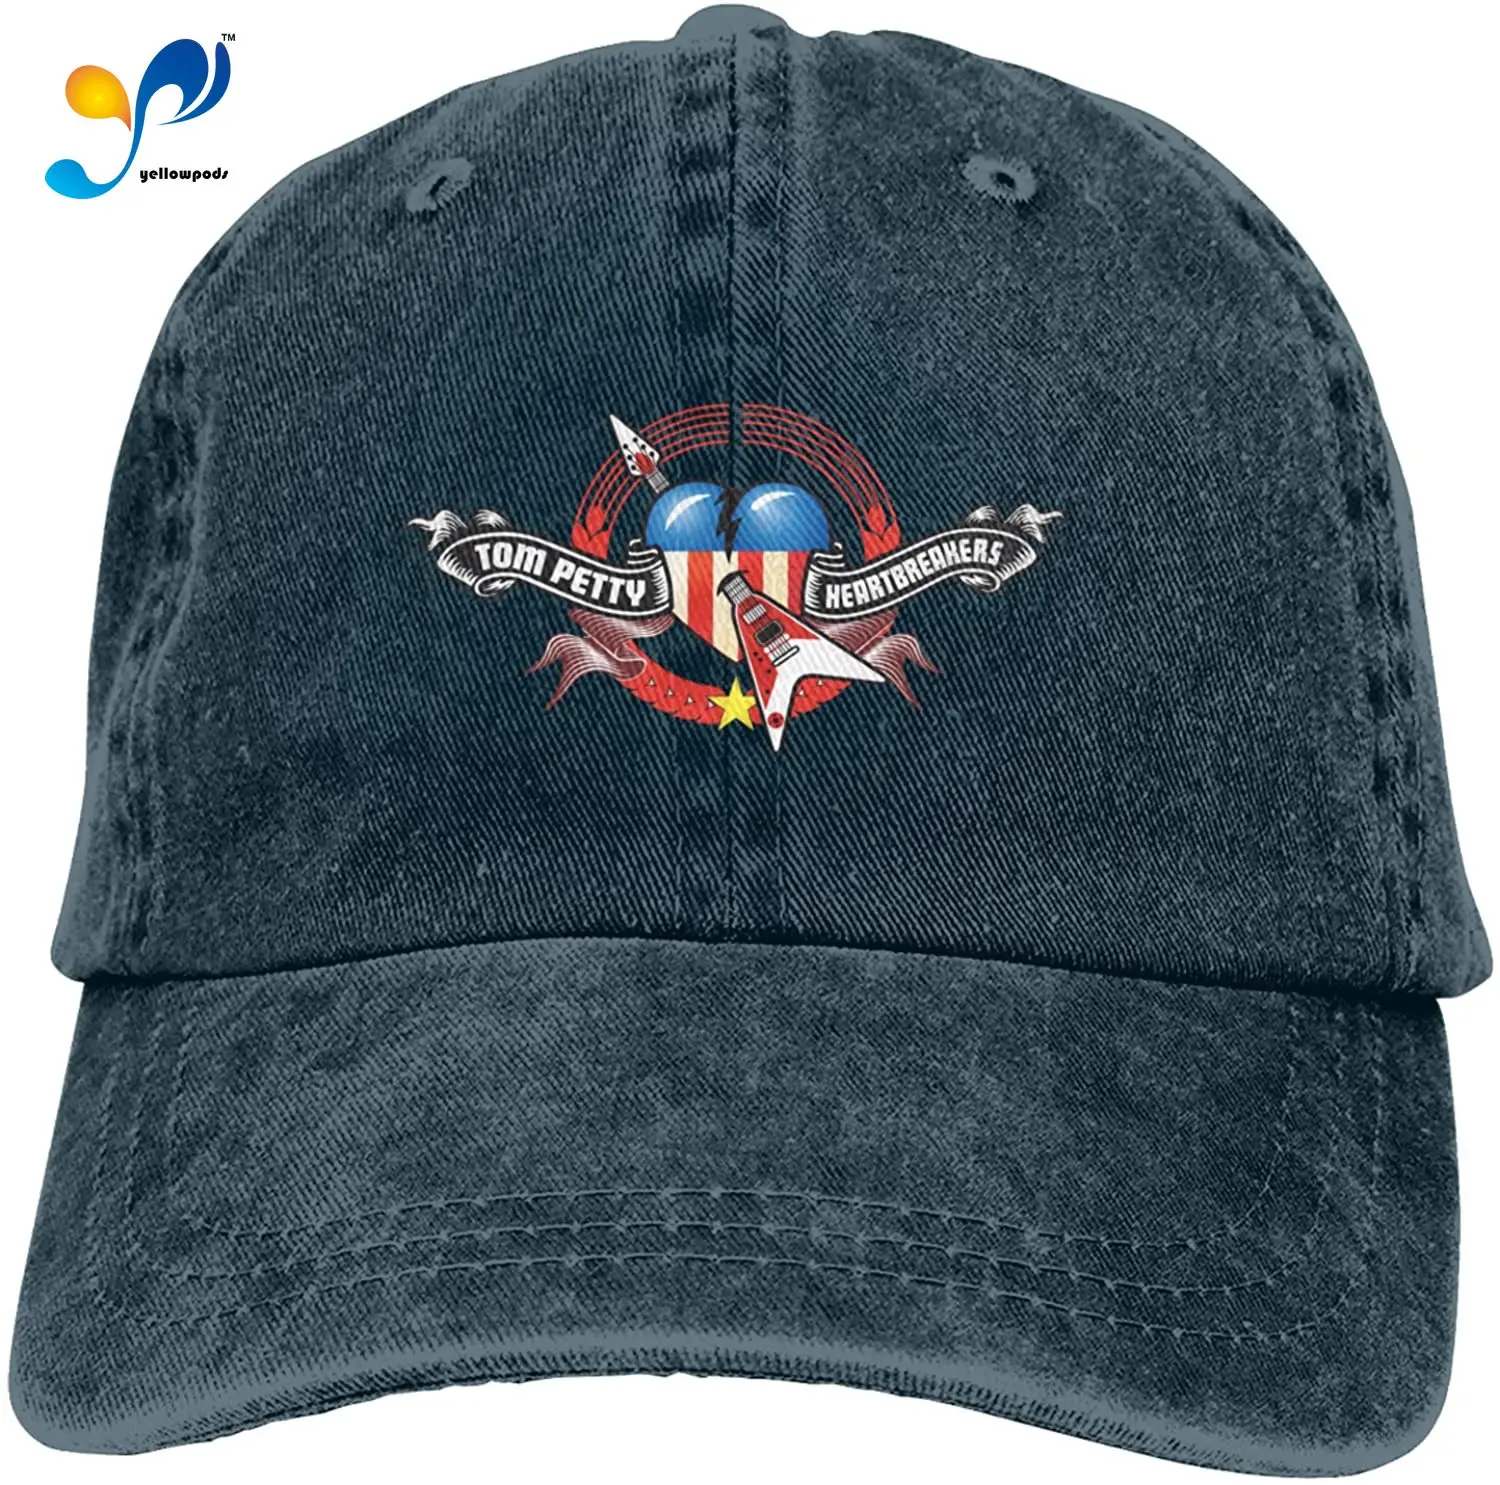 

Tom-Petty-and-The-Heartbreakers Unisex Vintage Jeans Baseball Hat Adjustable Denim Cap Trucker Hat